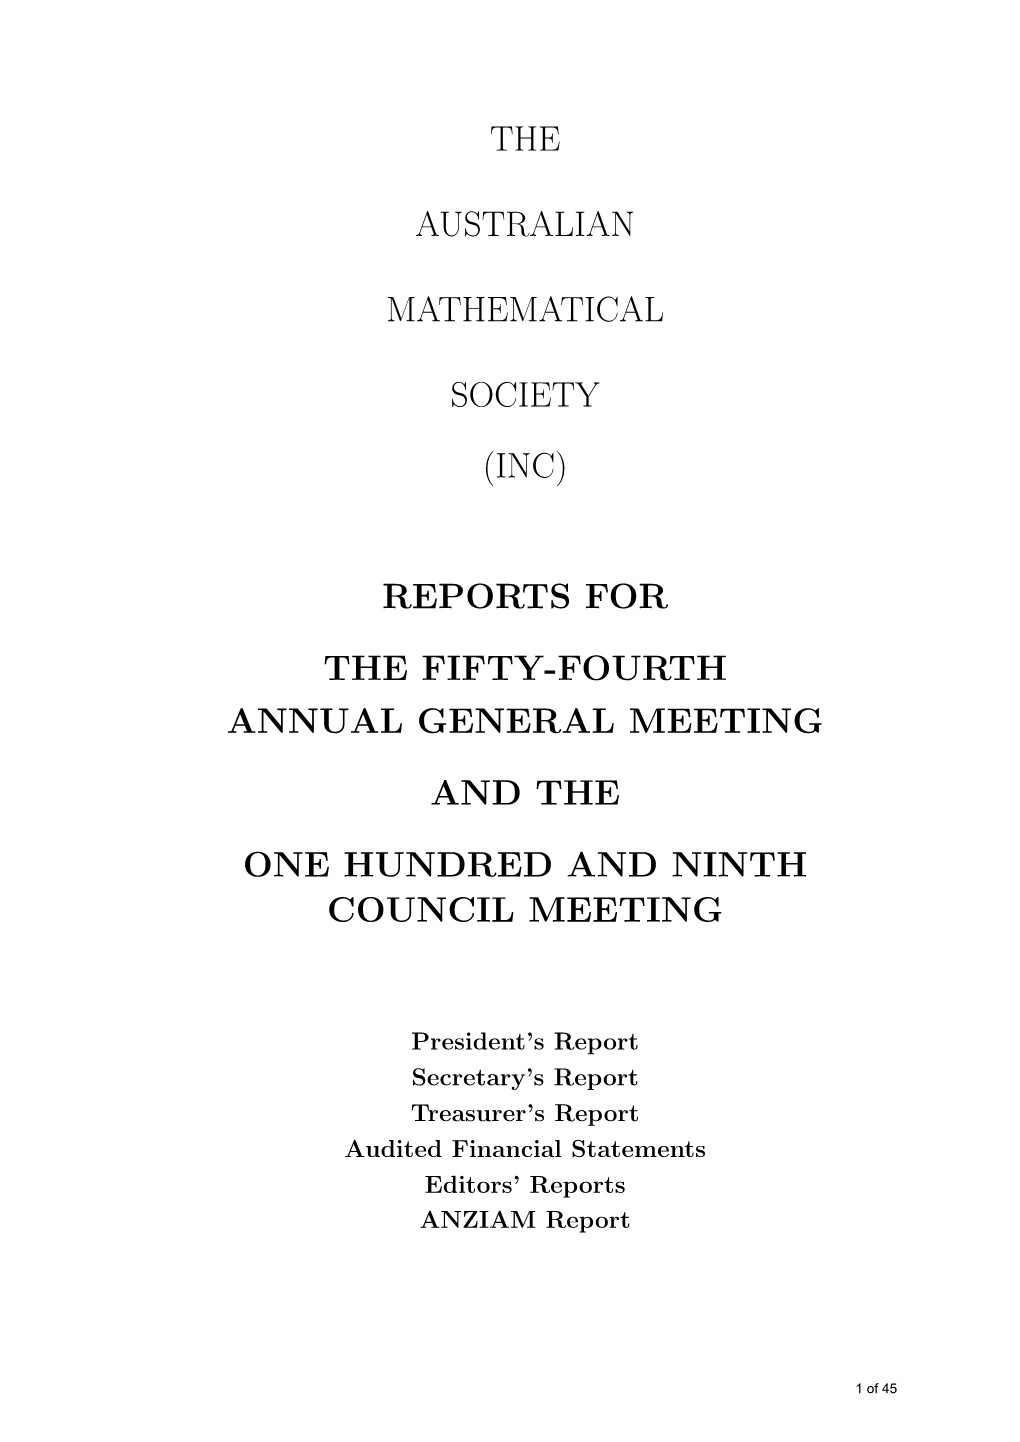 The Australian Mathematical Society